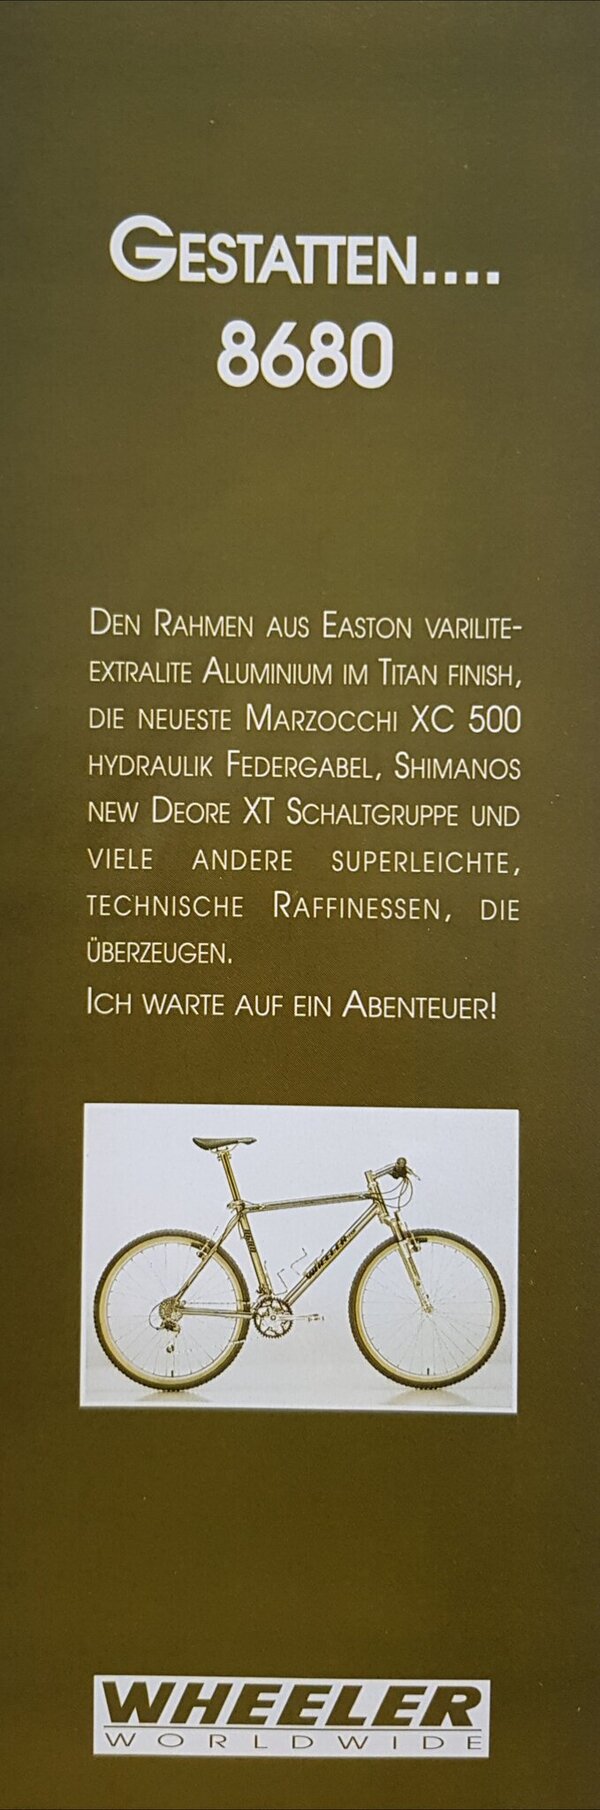 Wheeler 8680 Ad aus Bike 1994.jpg